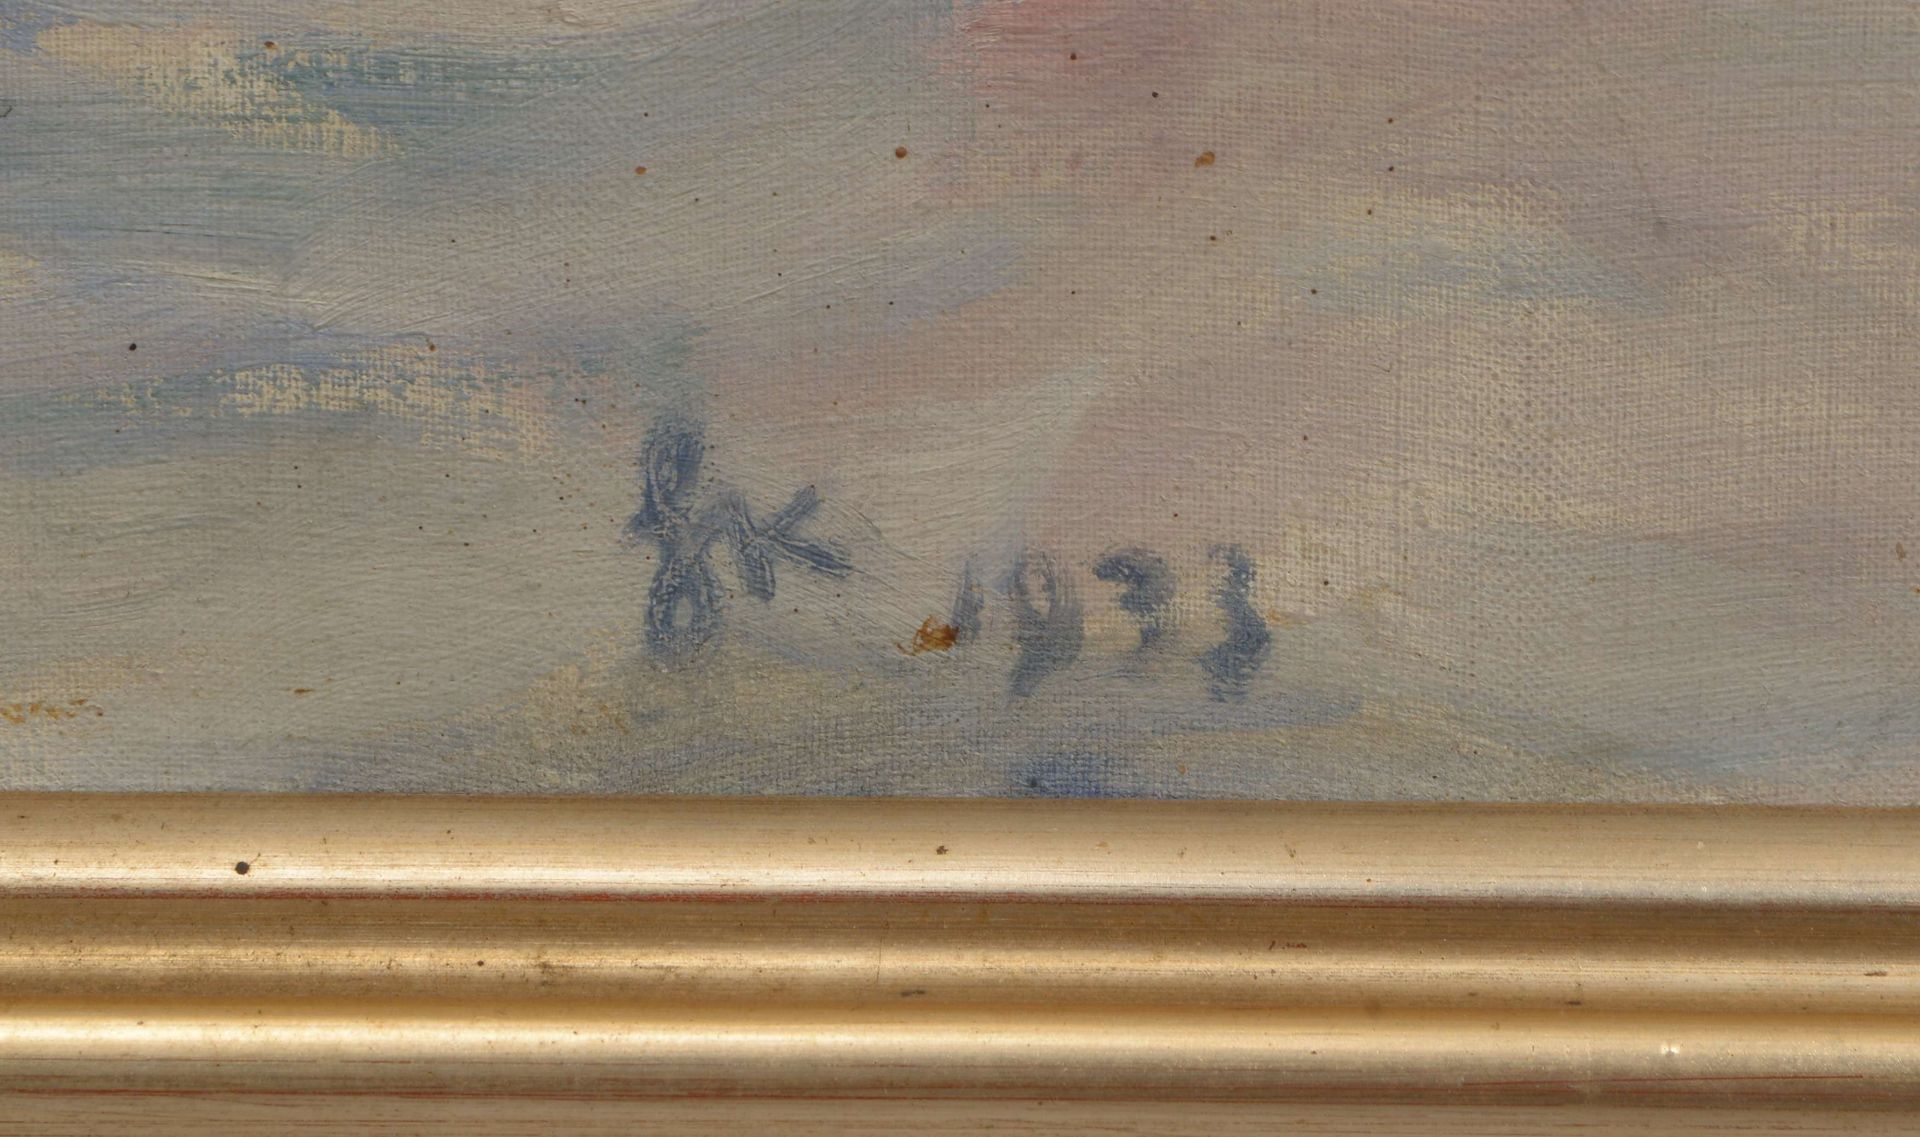 Körtzinger, Hugo, 'Eisschollen', Öl/Lw, unten links sowie verso signiert/datiert '1933' - Bild 2 aus 3